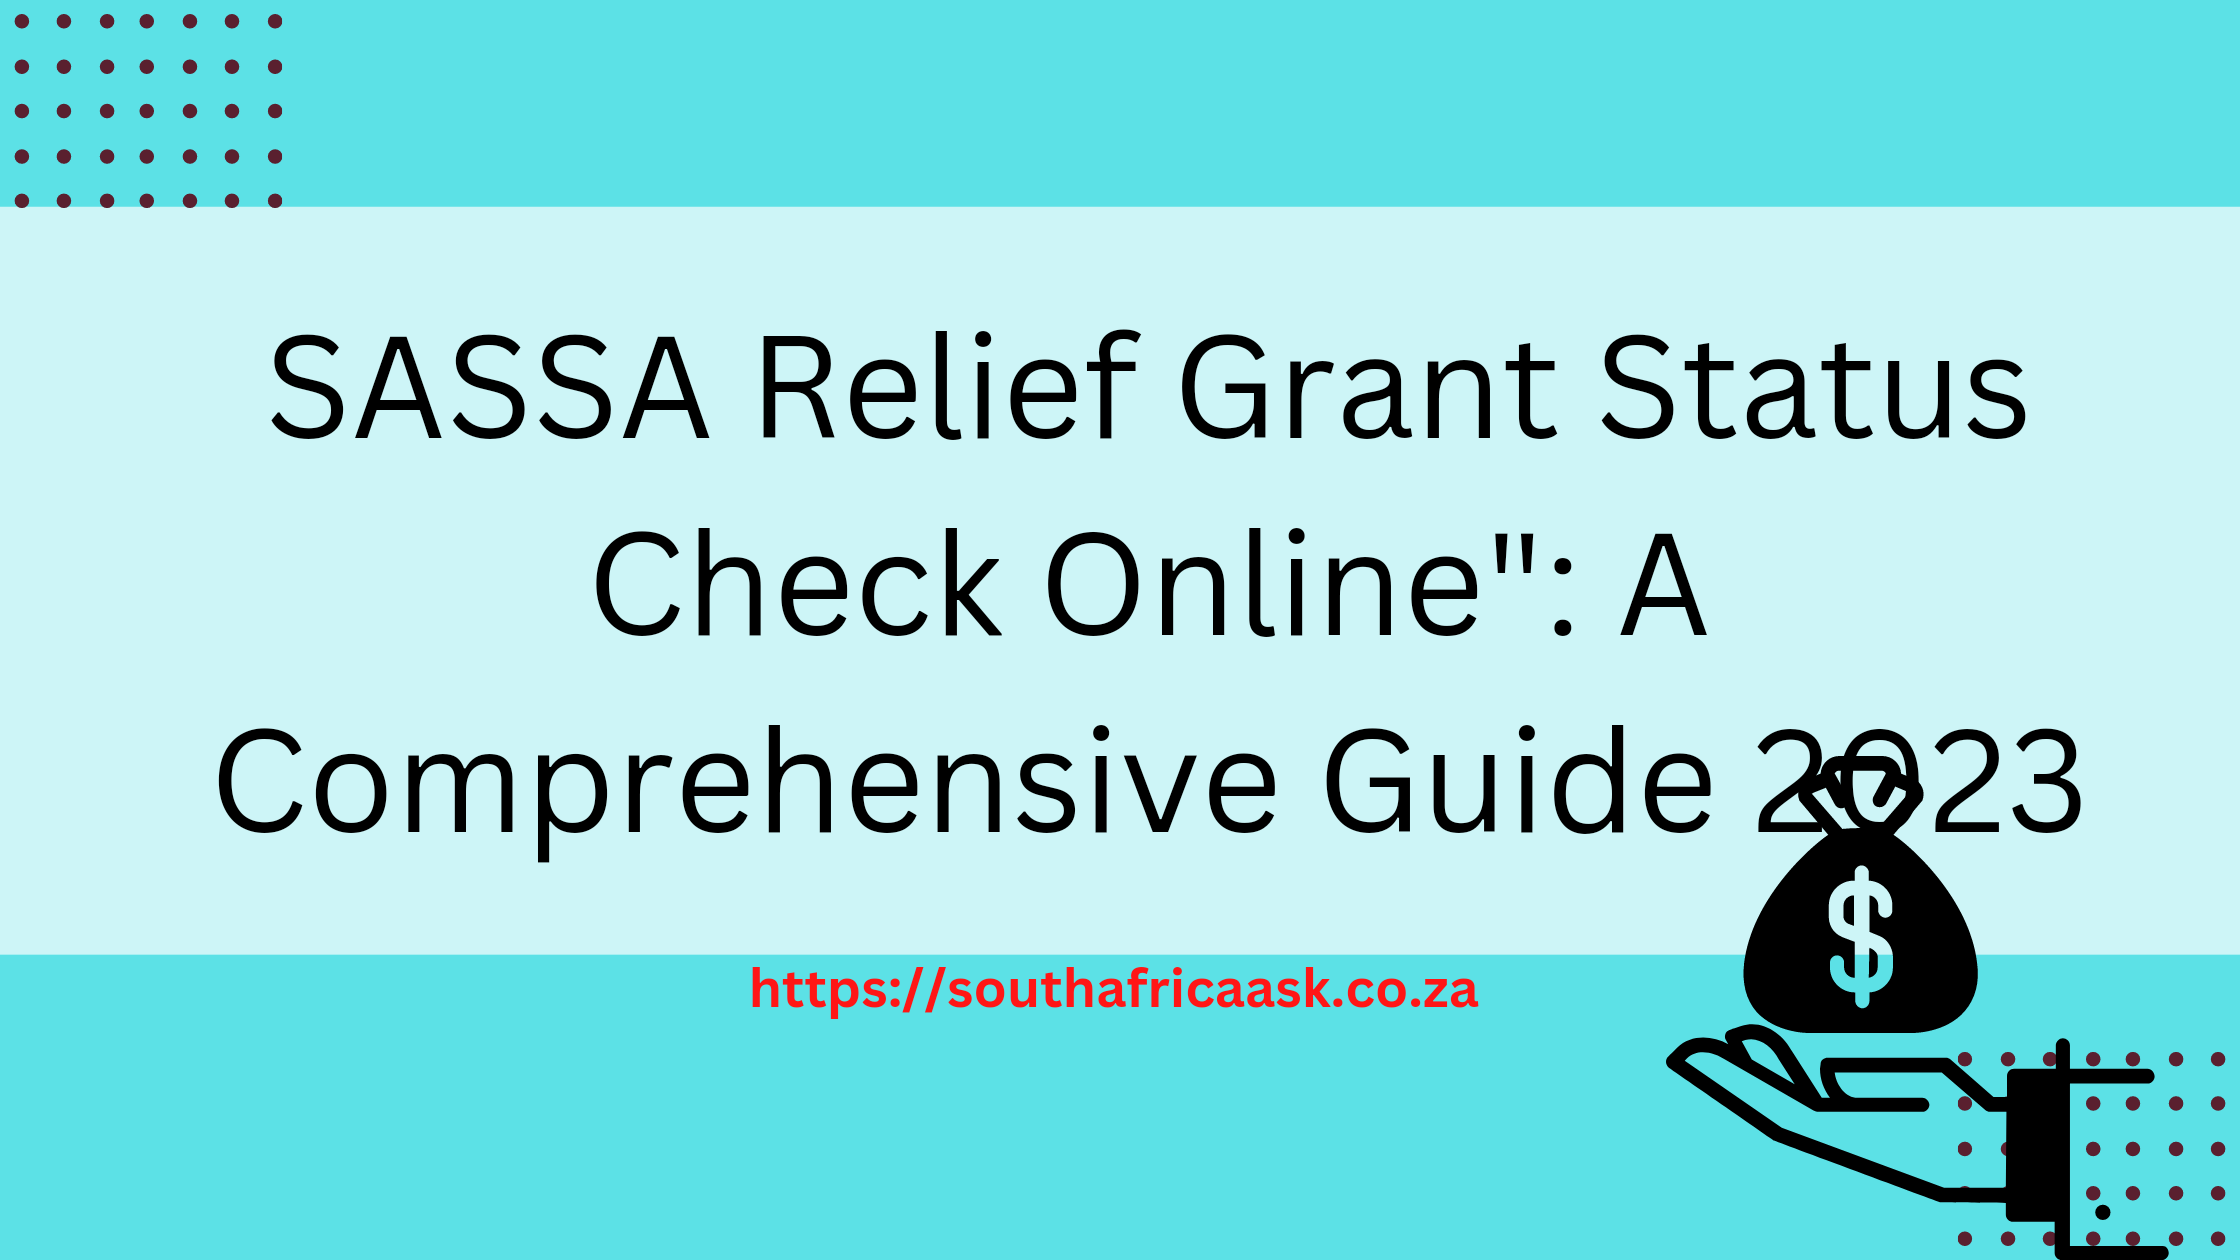 SASSA Relief Grant Status Check Online": A Comprehensive Guide 2023